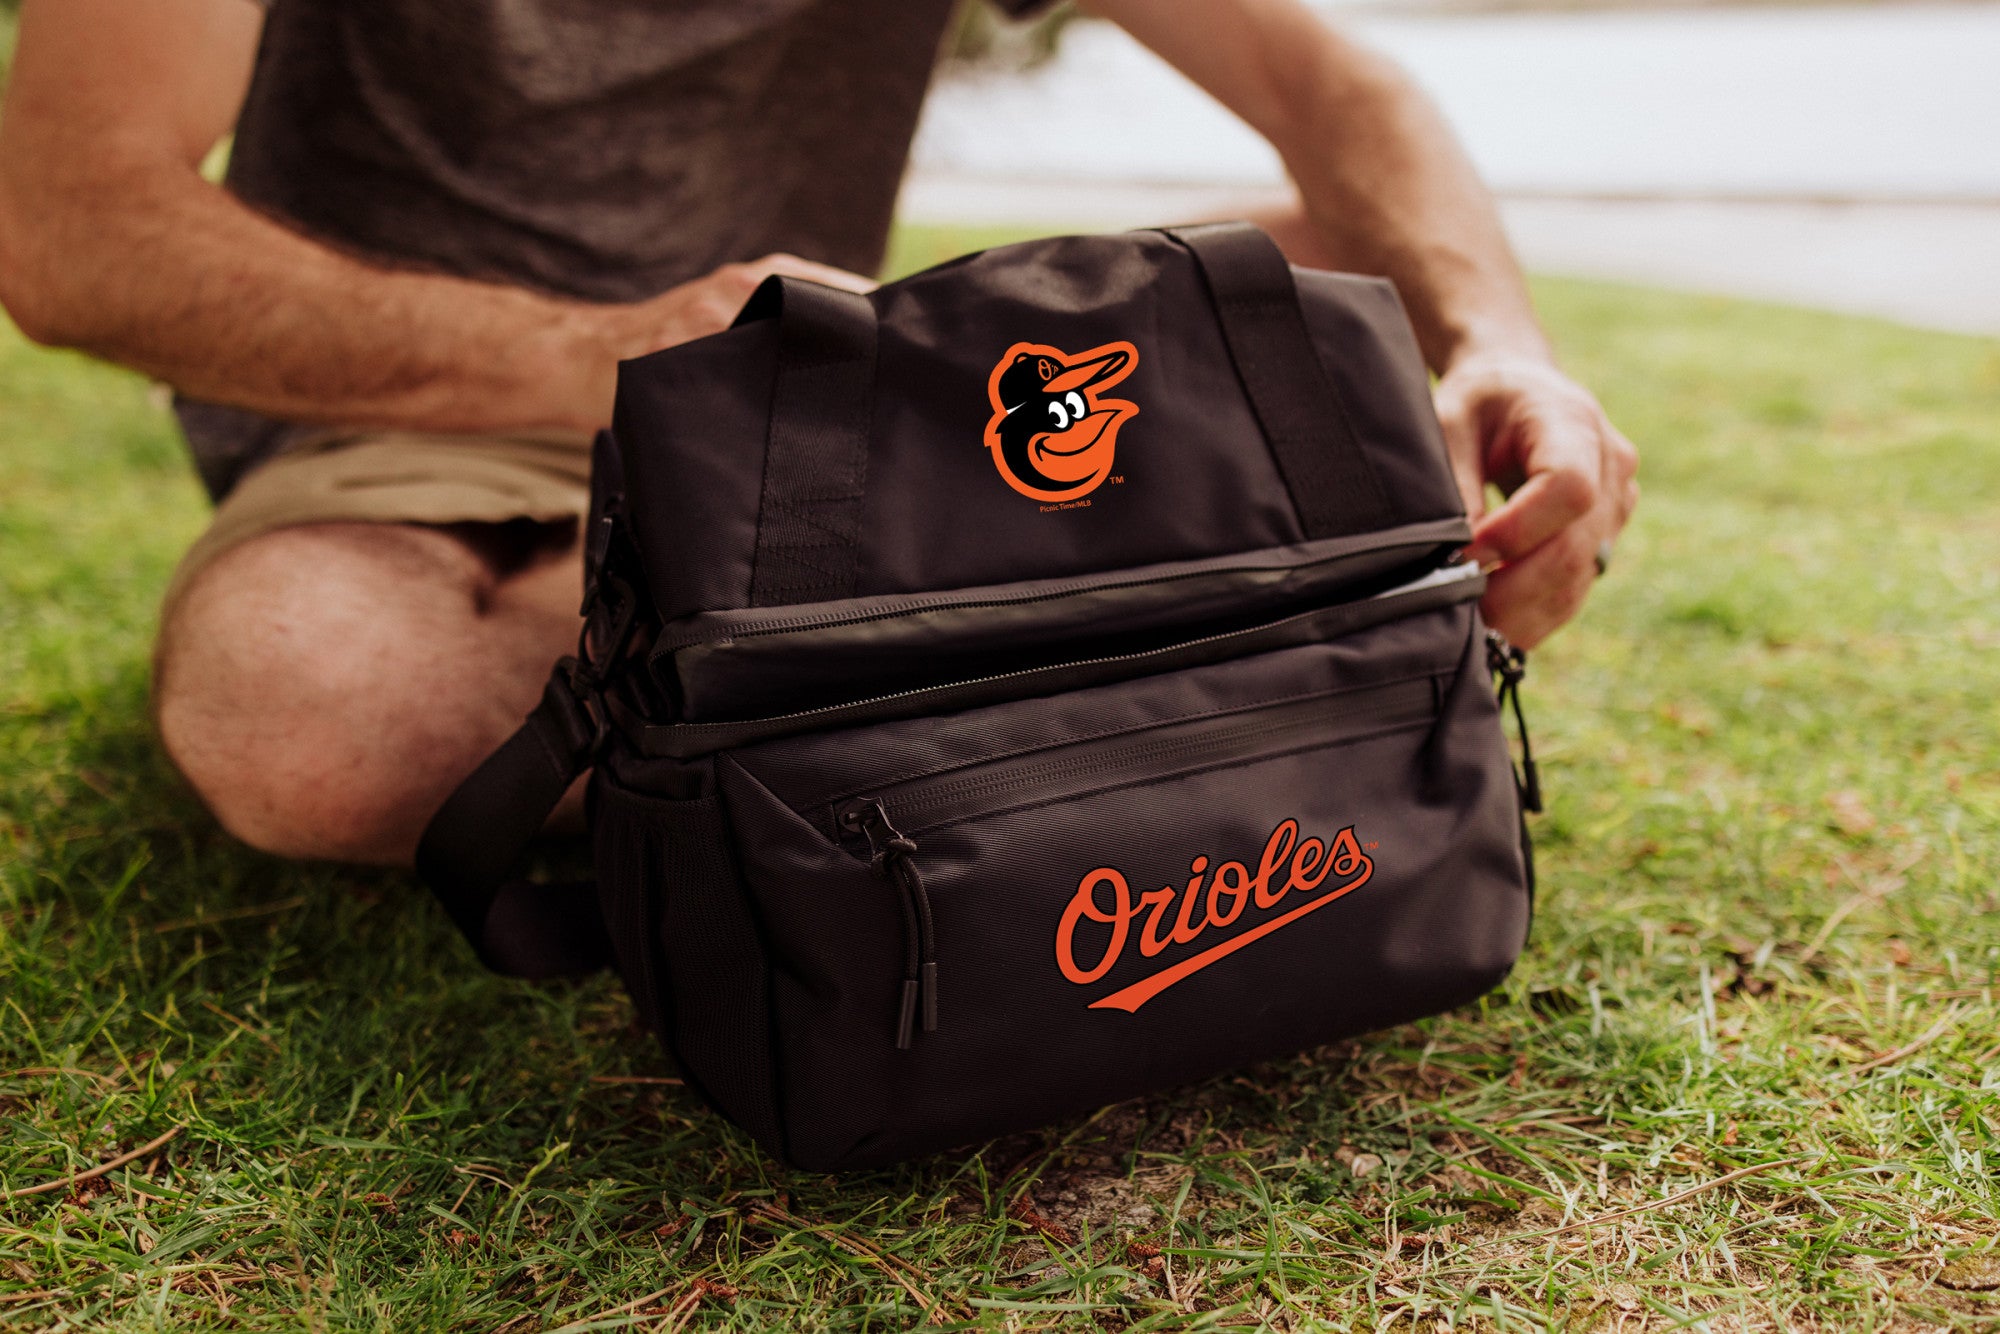 Baltimore Orioles - Tarana Lunch Bag Cooler with Utensils